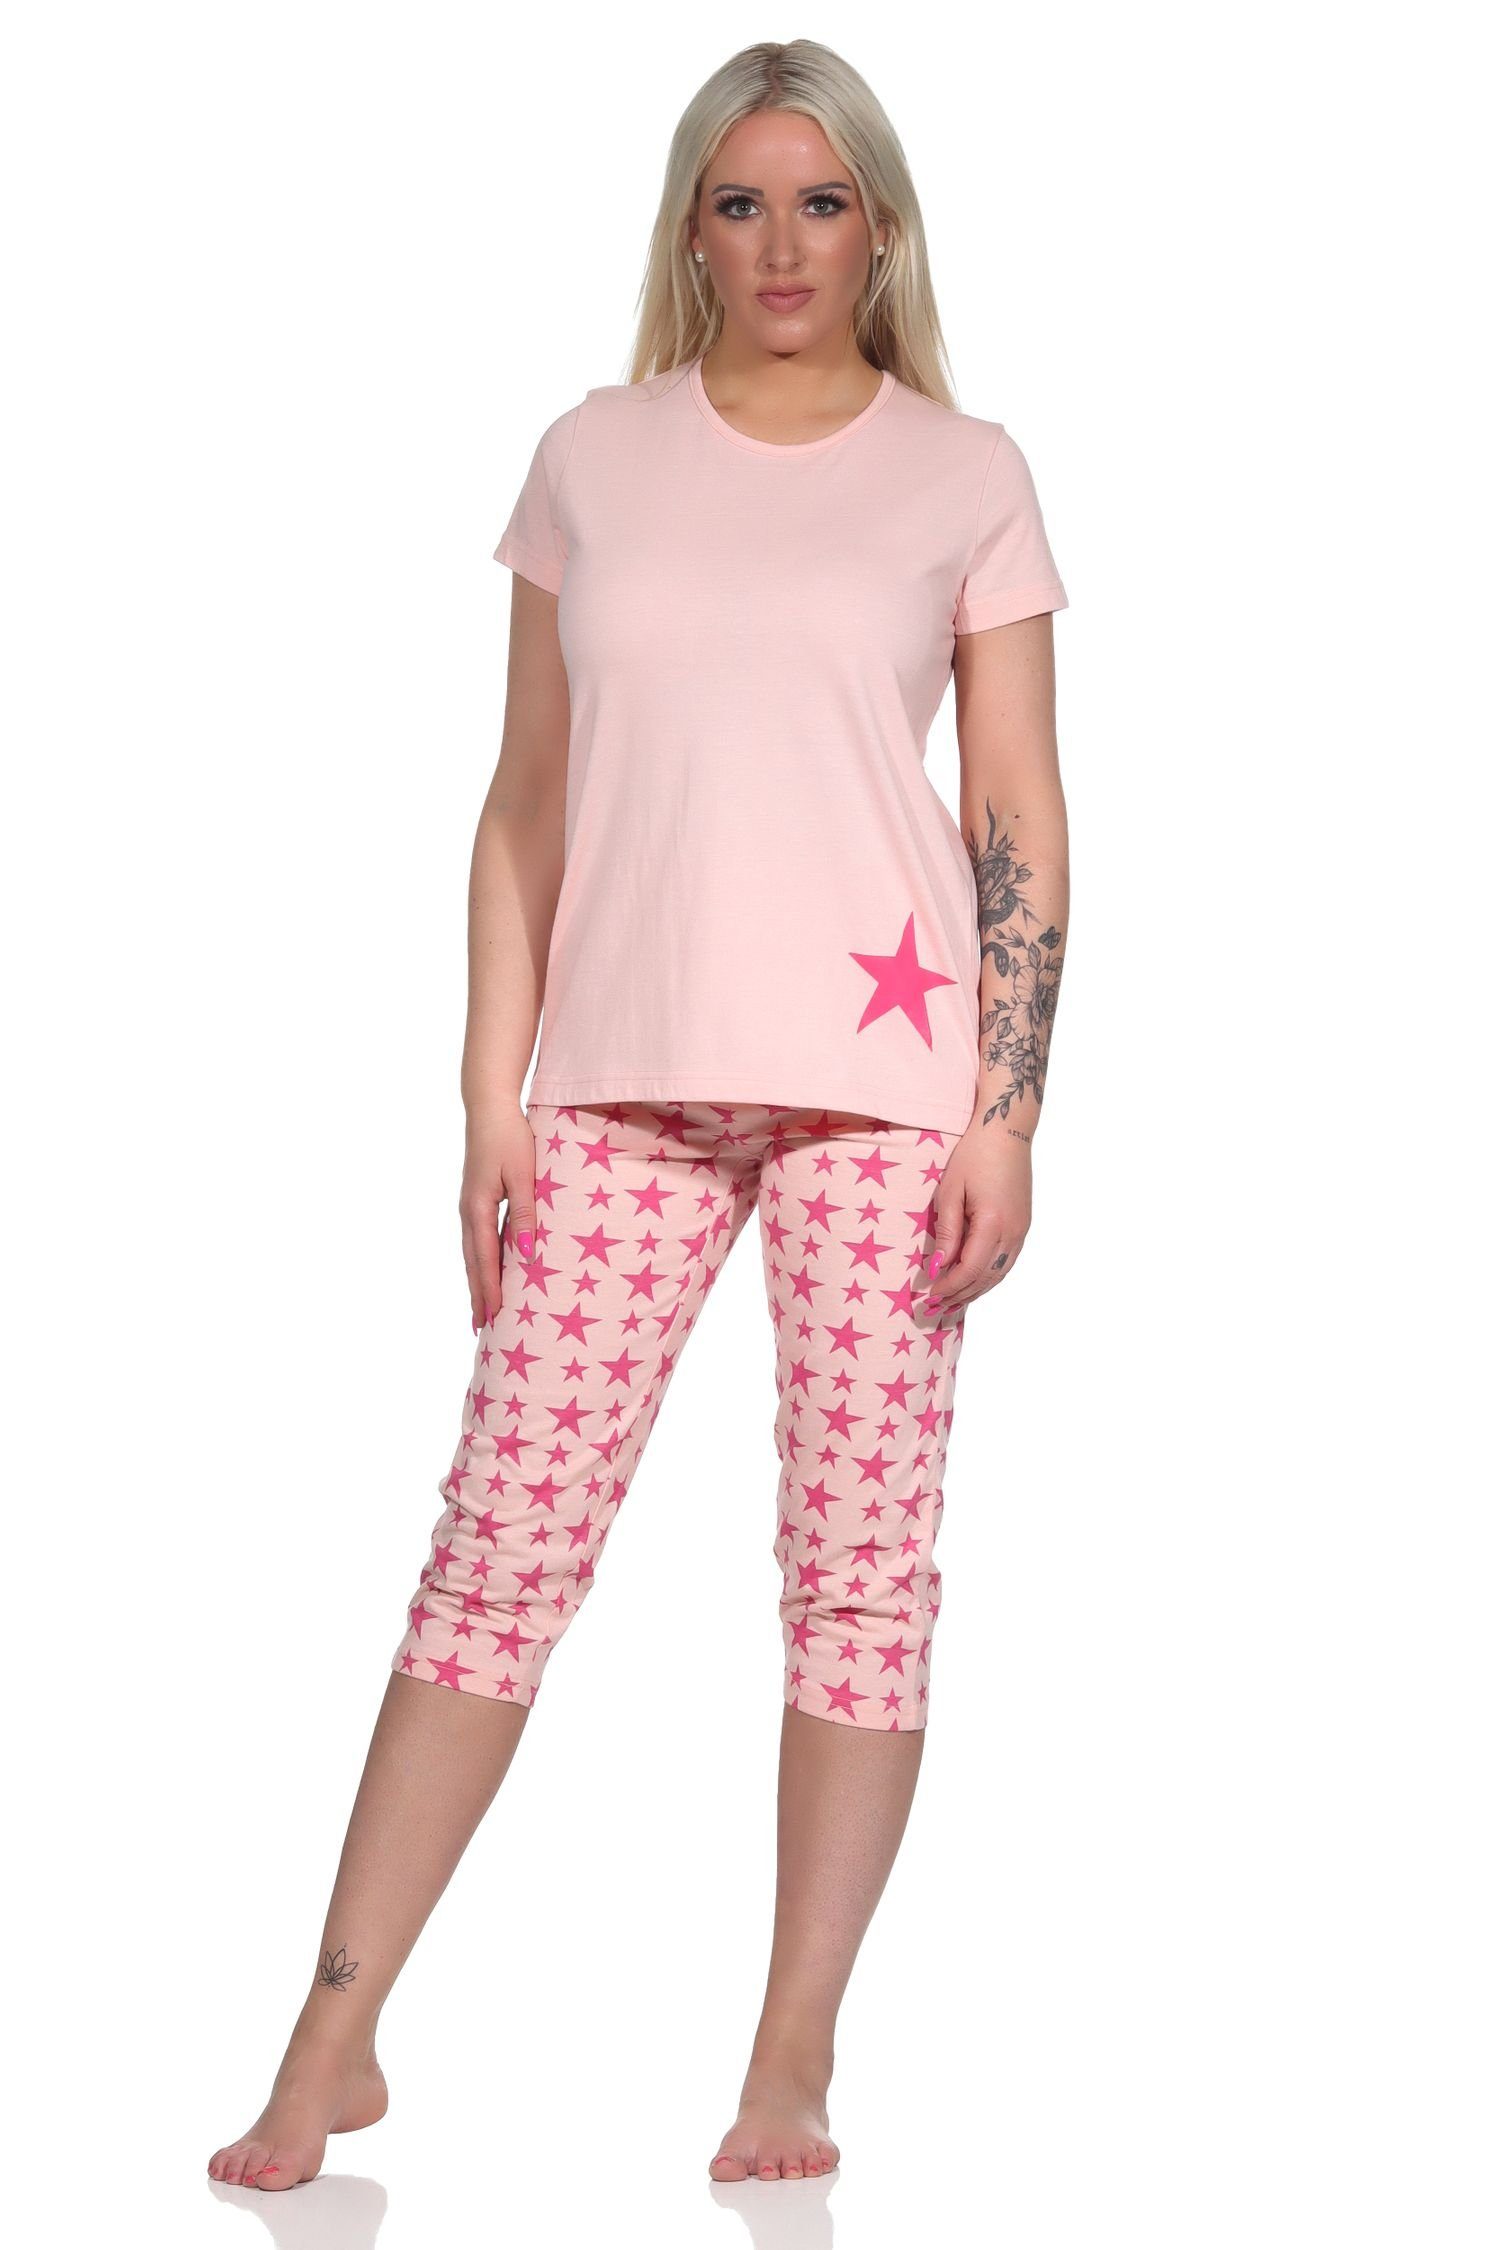 Normann Pyjama Damen Capri Pyjama, Schlafanzug mit Sternen - 112 204 10 735 rosa